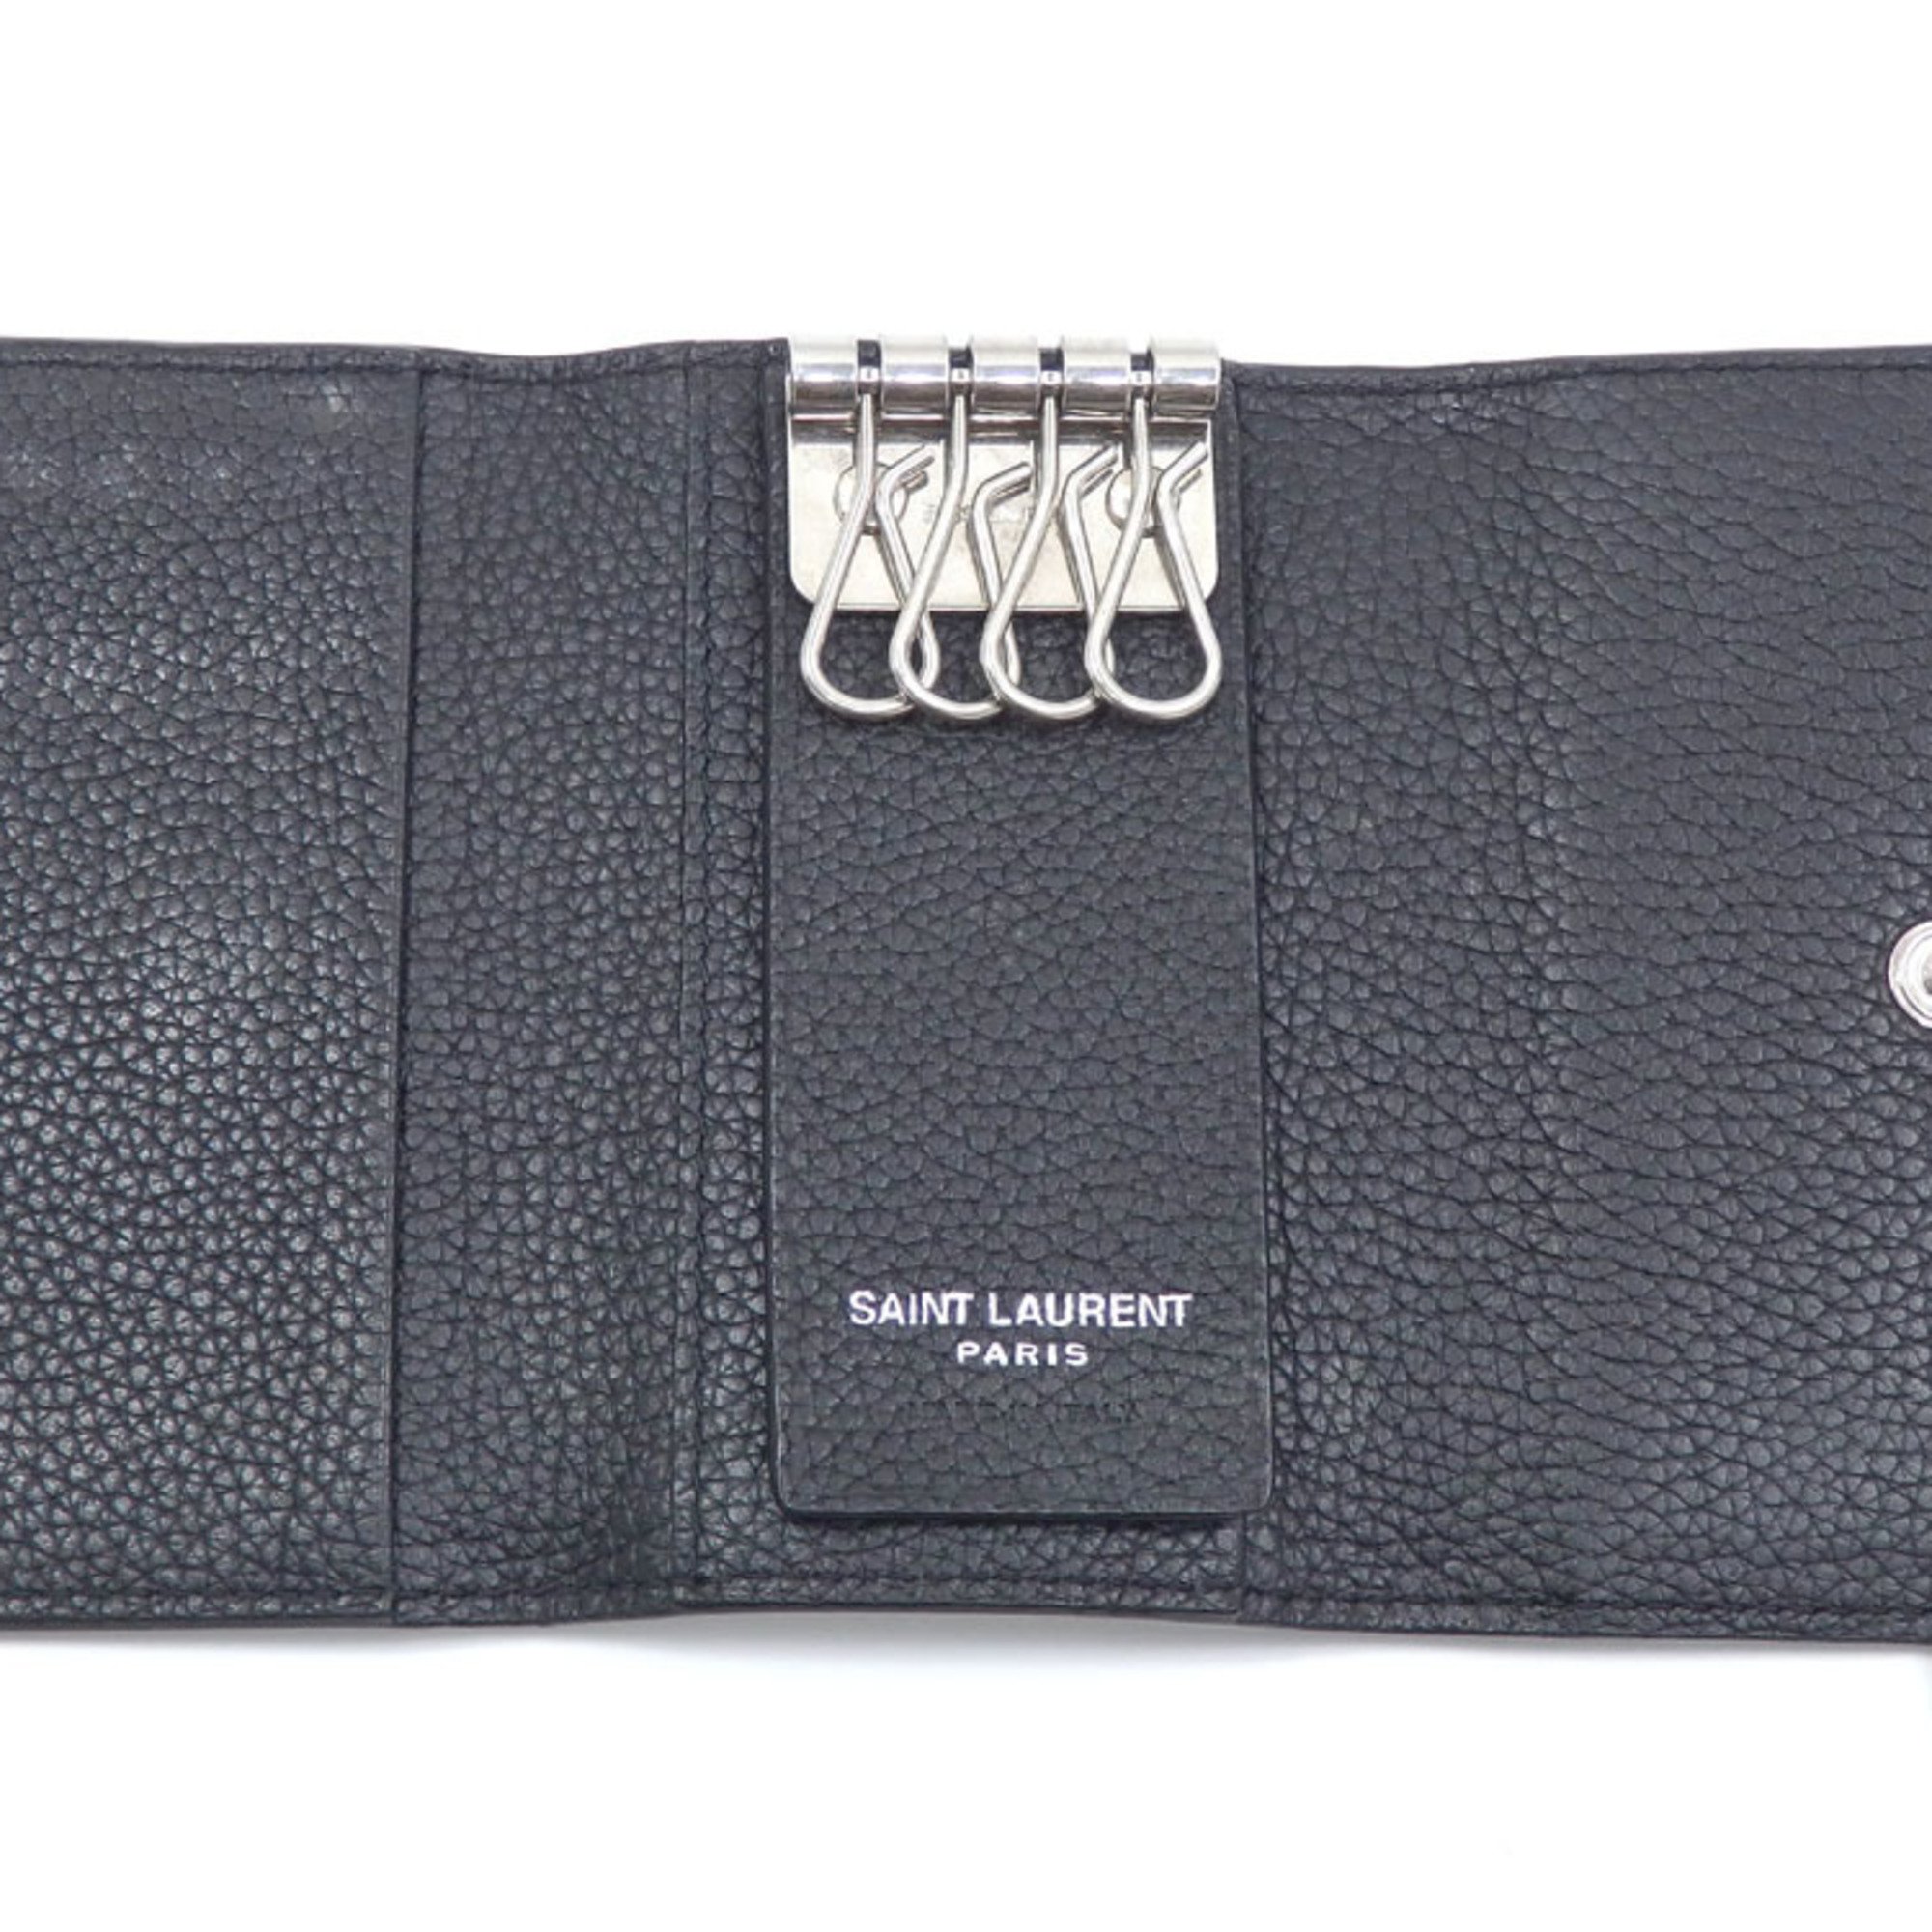 Saint Laurent 4 Row Key Case Black Leather Women's Men's Unisex Holder 041830